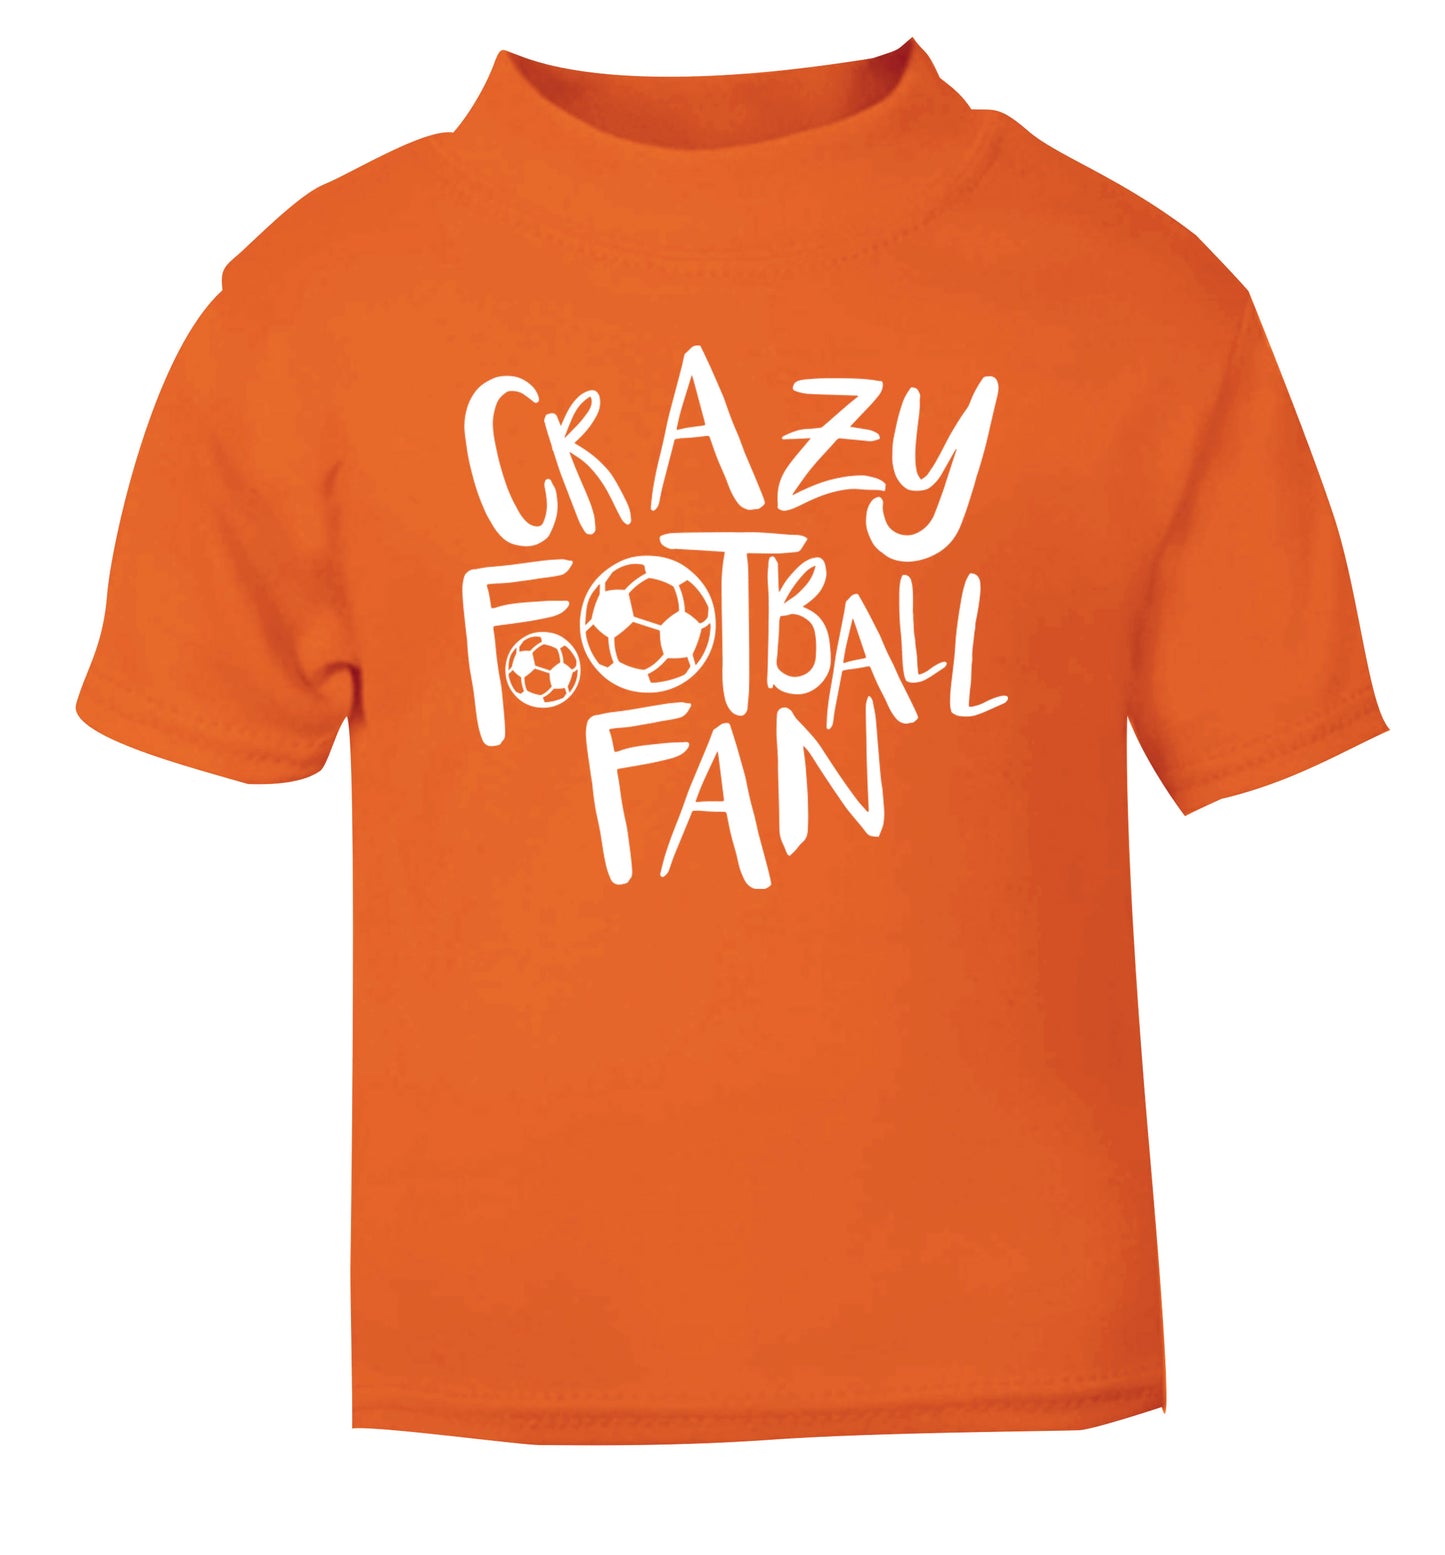 Crazy football fan orange Baby Toddler Tshirt 2 Years